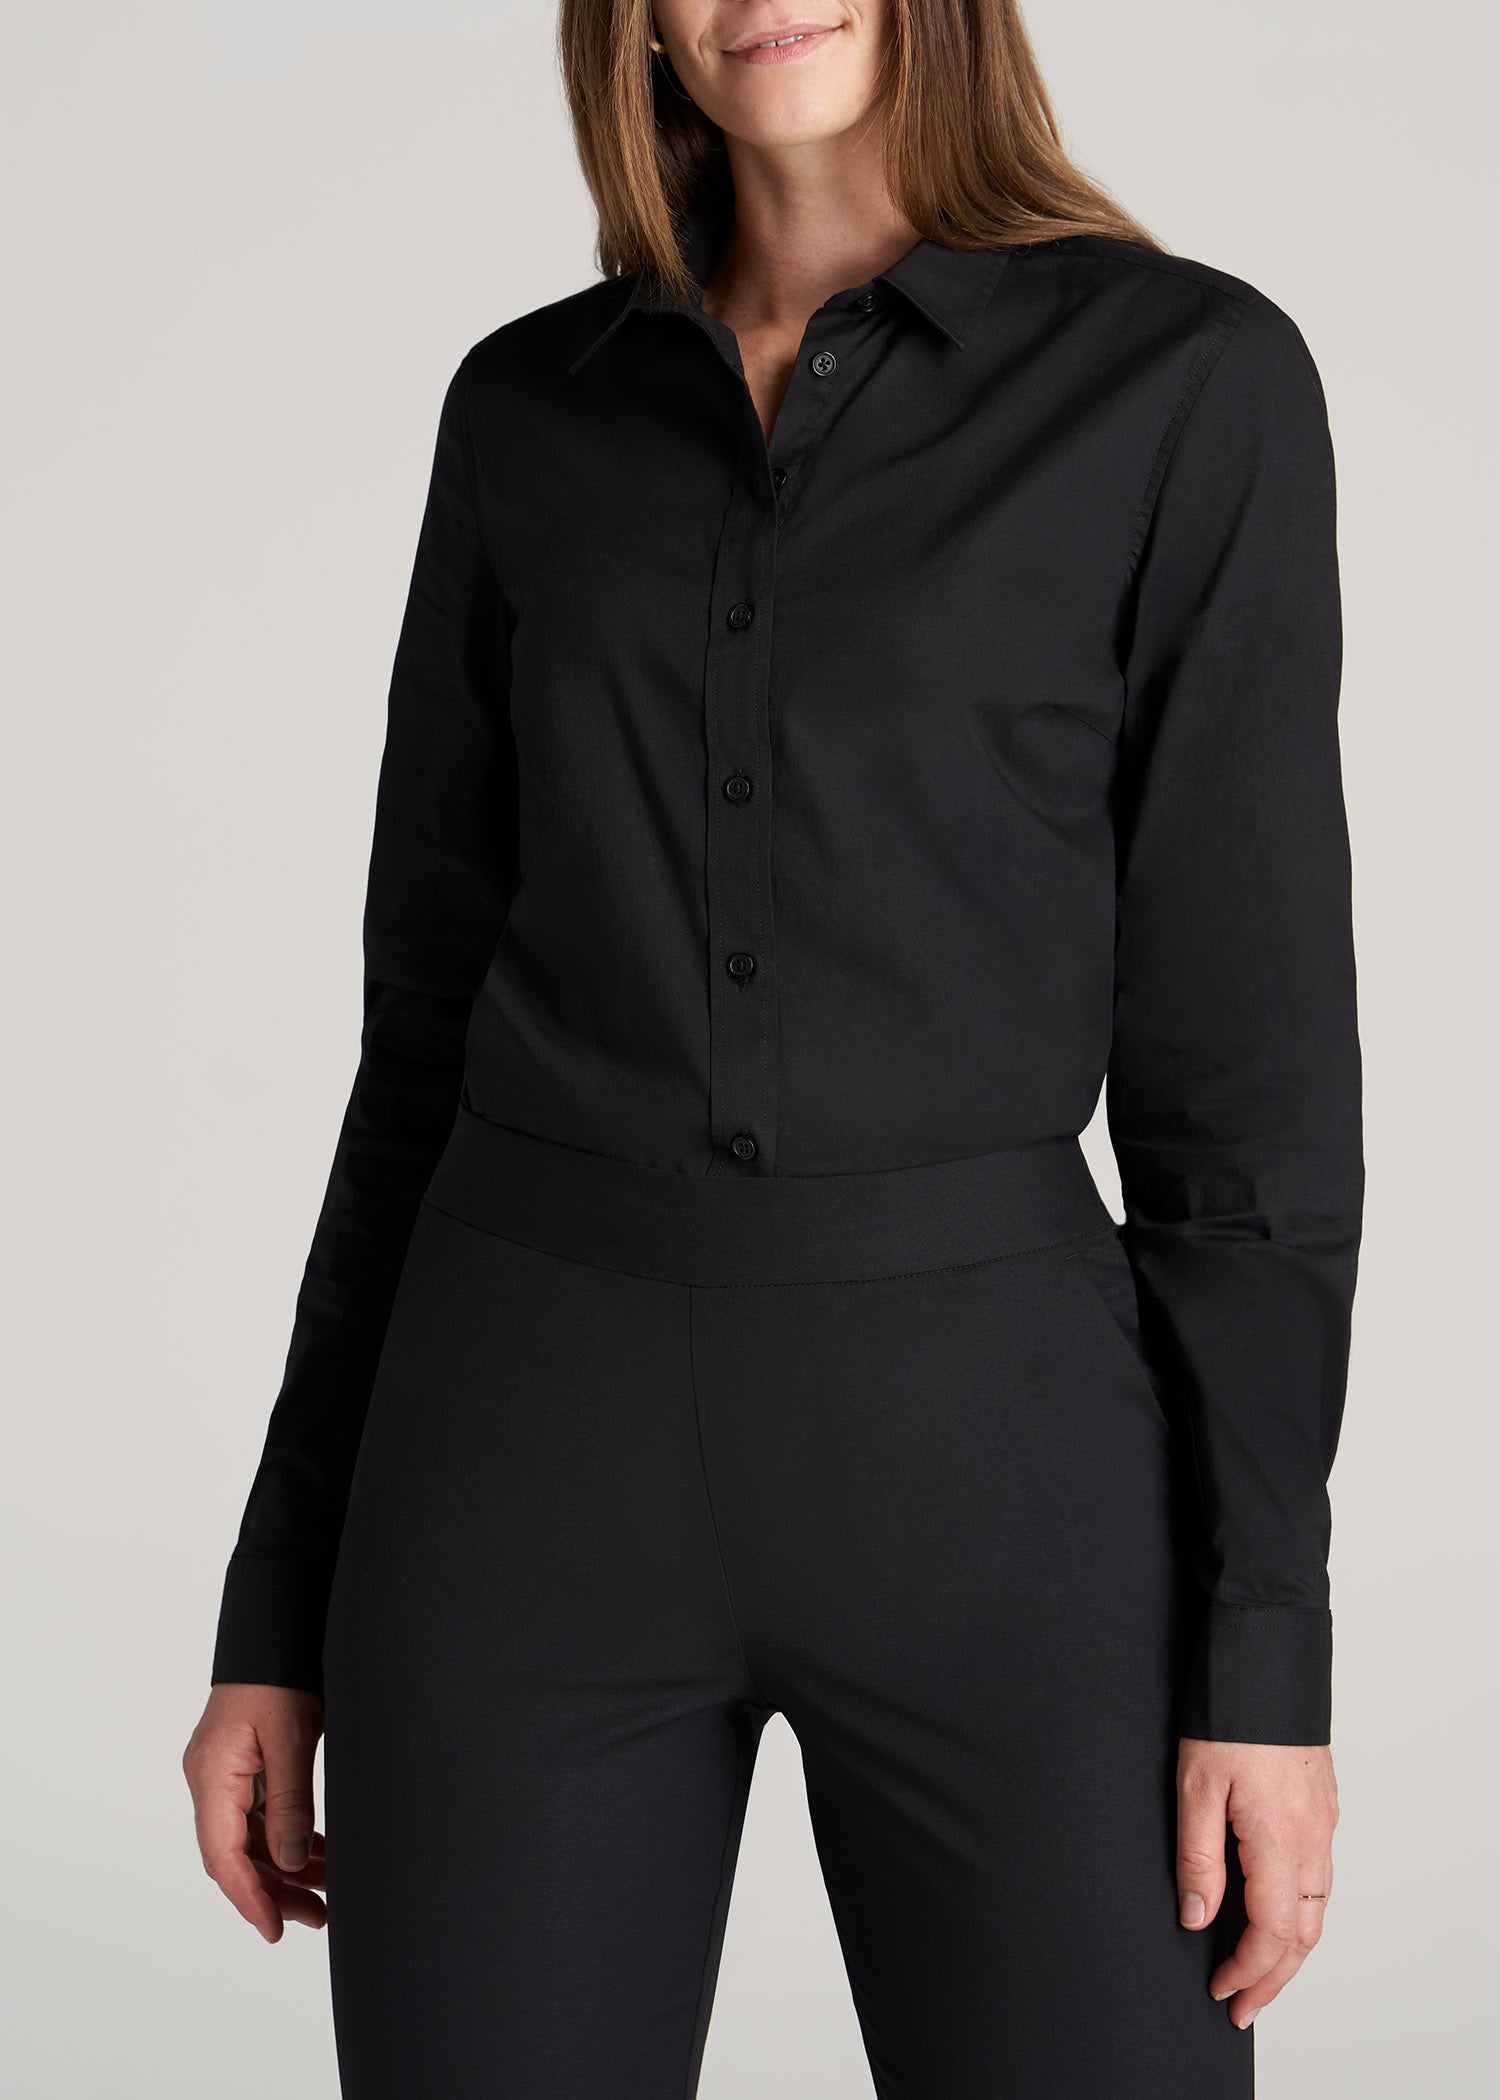 Button-Up Dress Shirt for Tall Women in Black